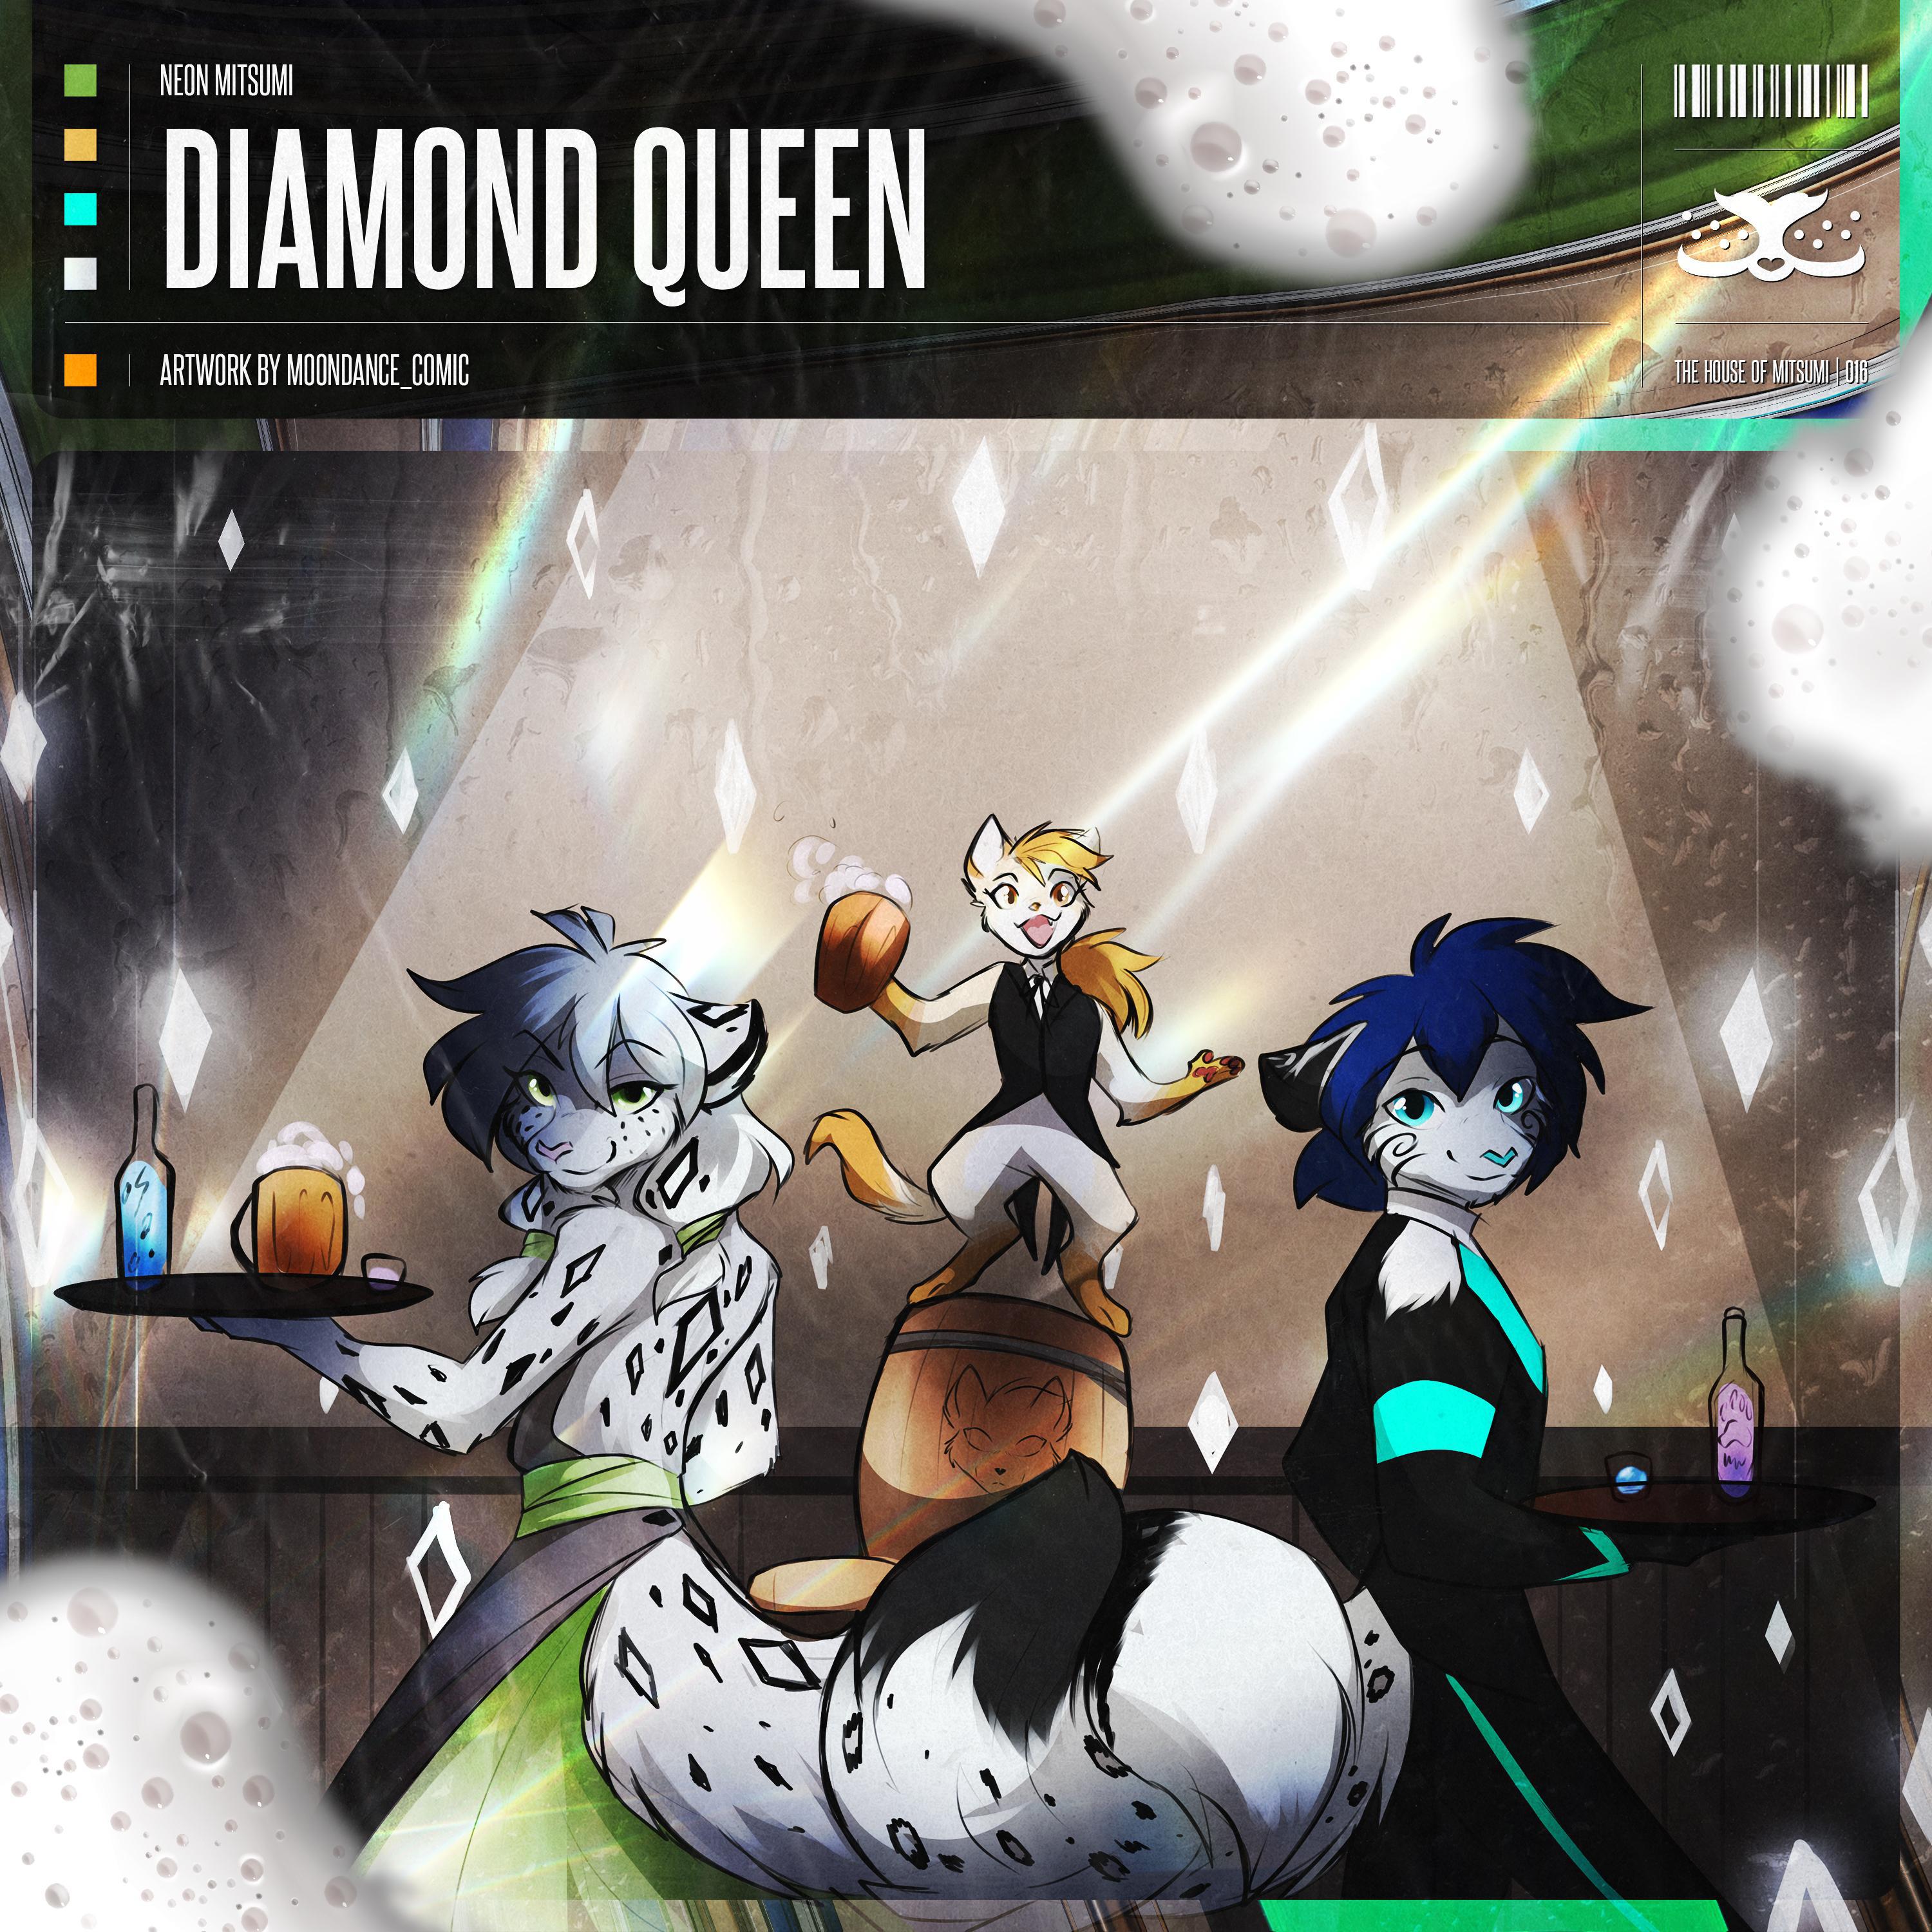 Neon Mitsumi - Diamond Queen (Extended Mix)